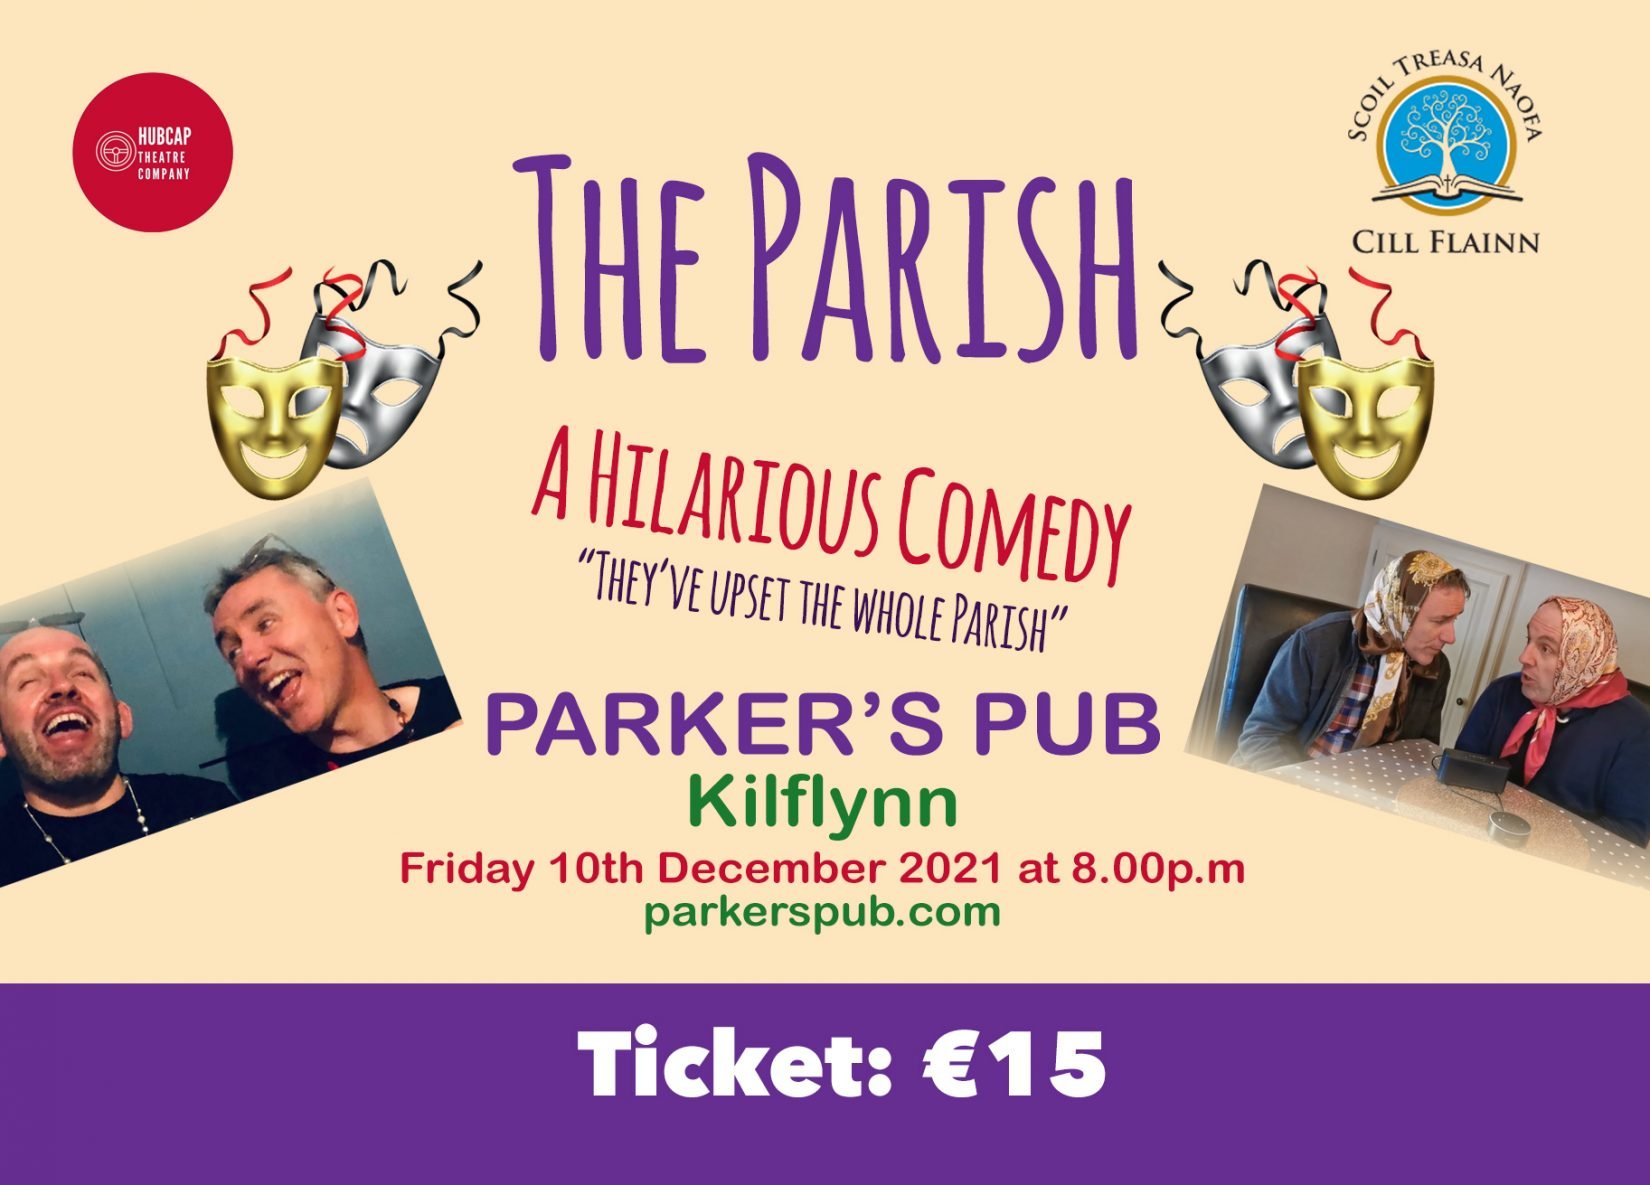 The Parish Comedy at Parkers Pub